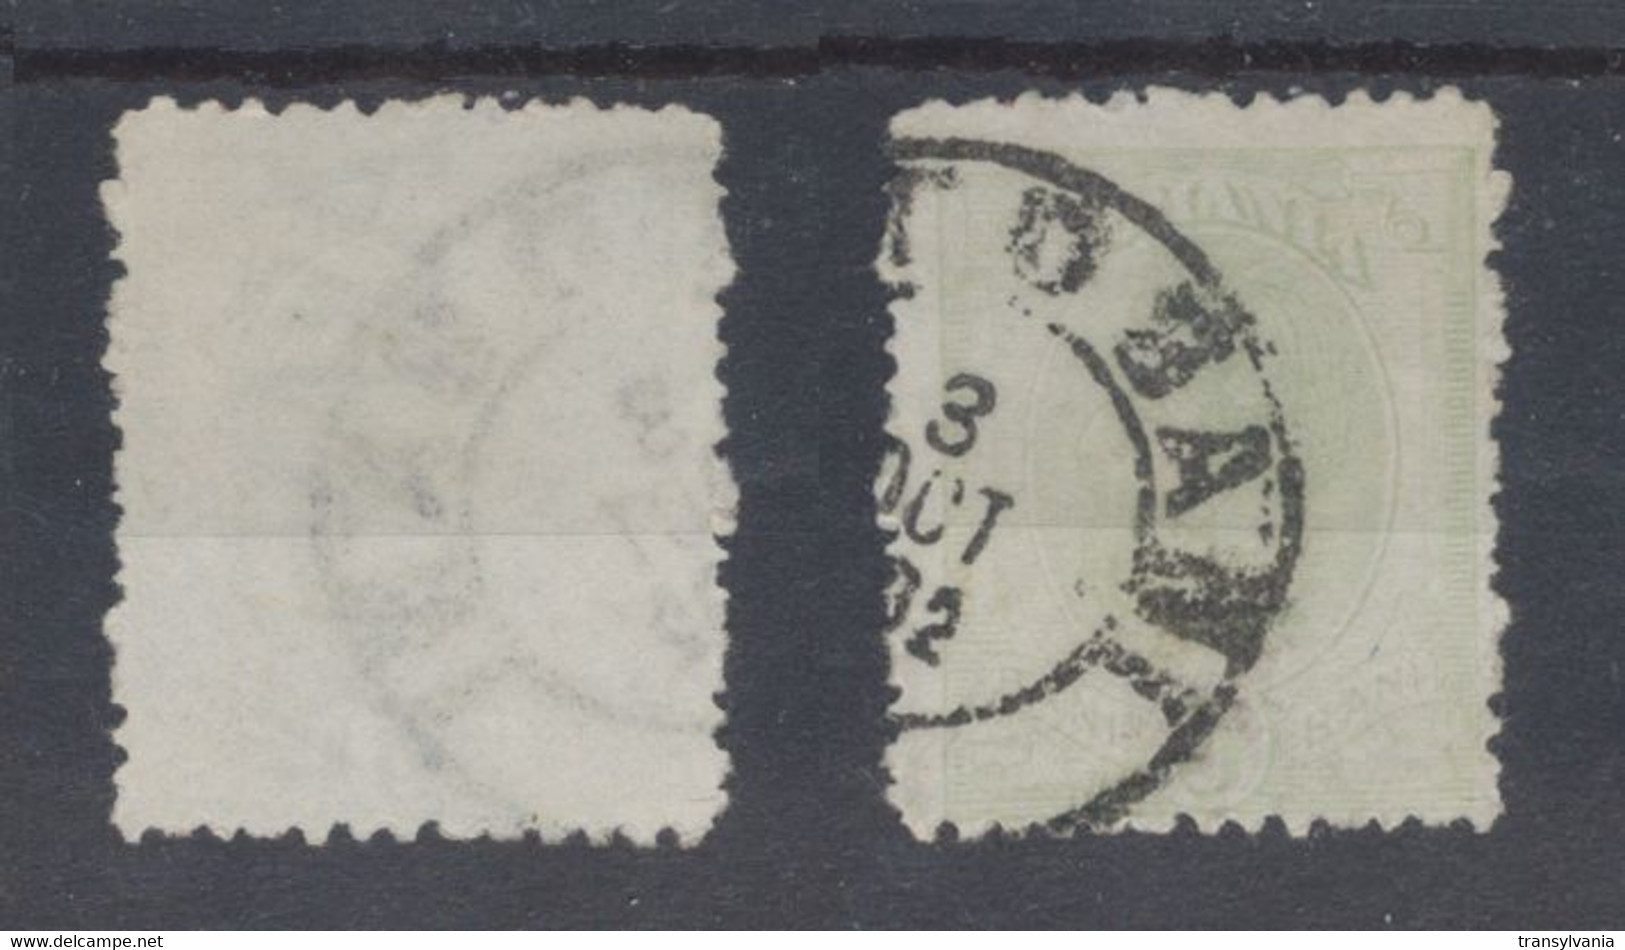 Romania 1900 Wheat Ear Issue 5 Bani Used Stamp With Scarce JOHANNOT Watermark - Variedades Y Curiosidades